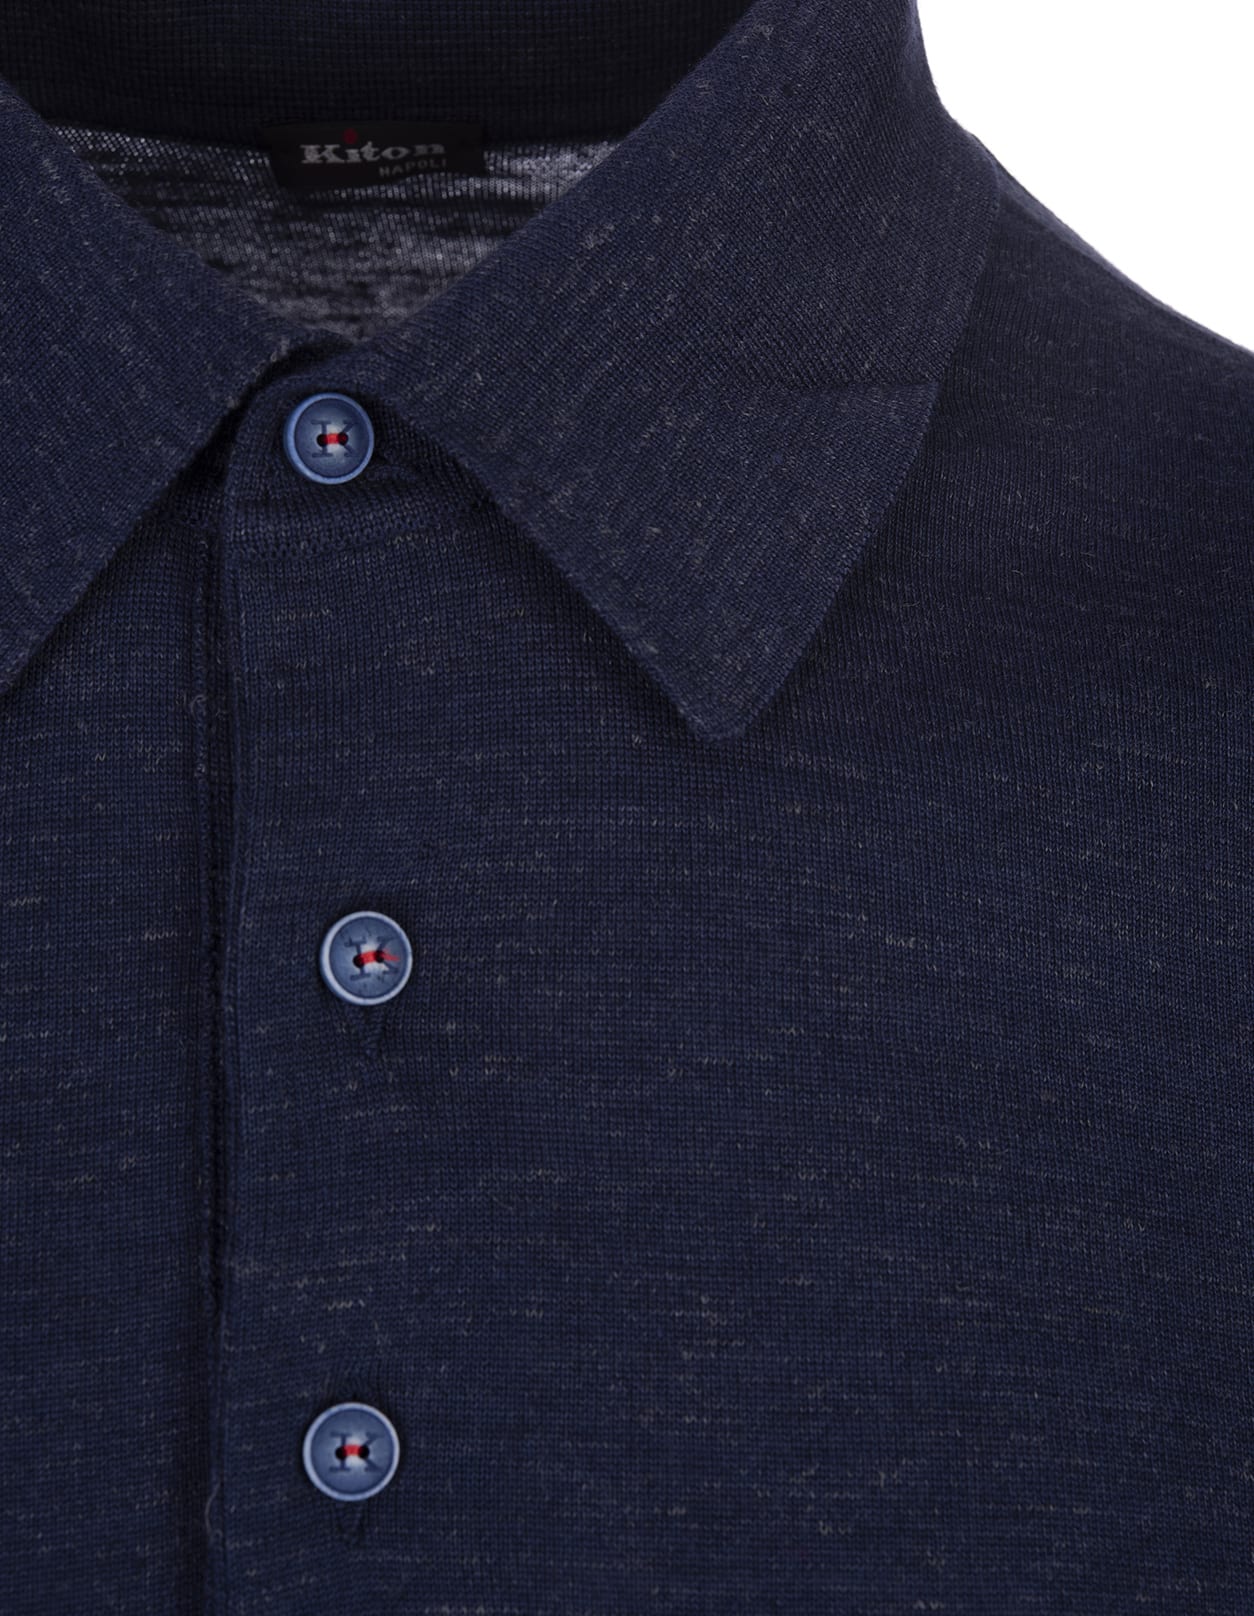 Shop Kiton Navy Blue Knitted Short-sleeved Polo Shirt